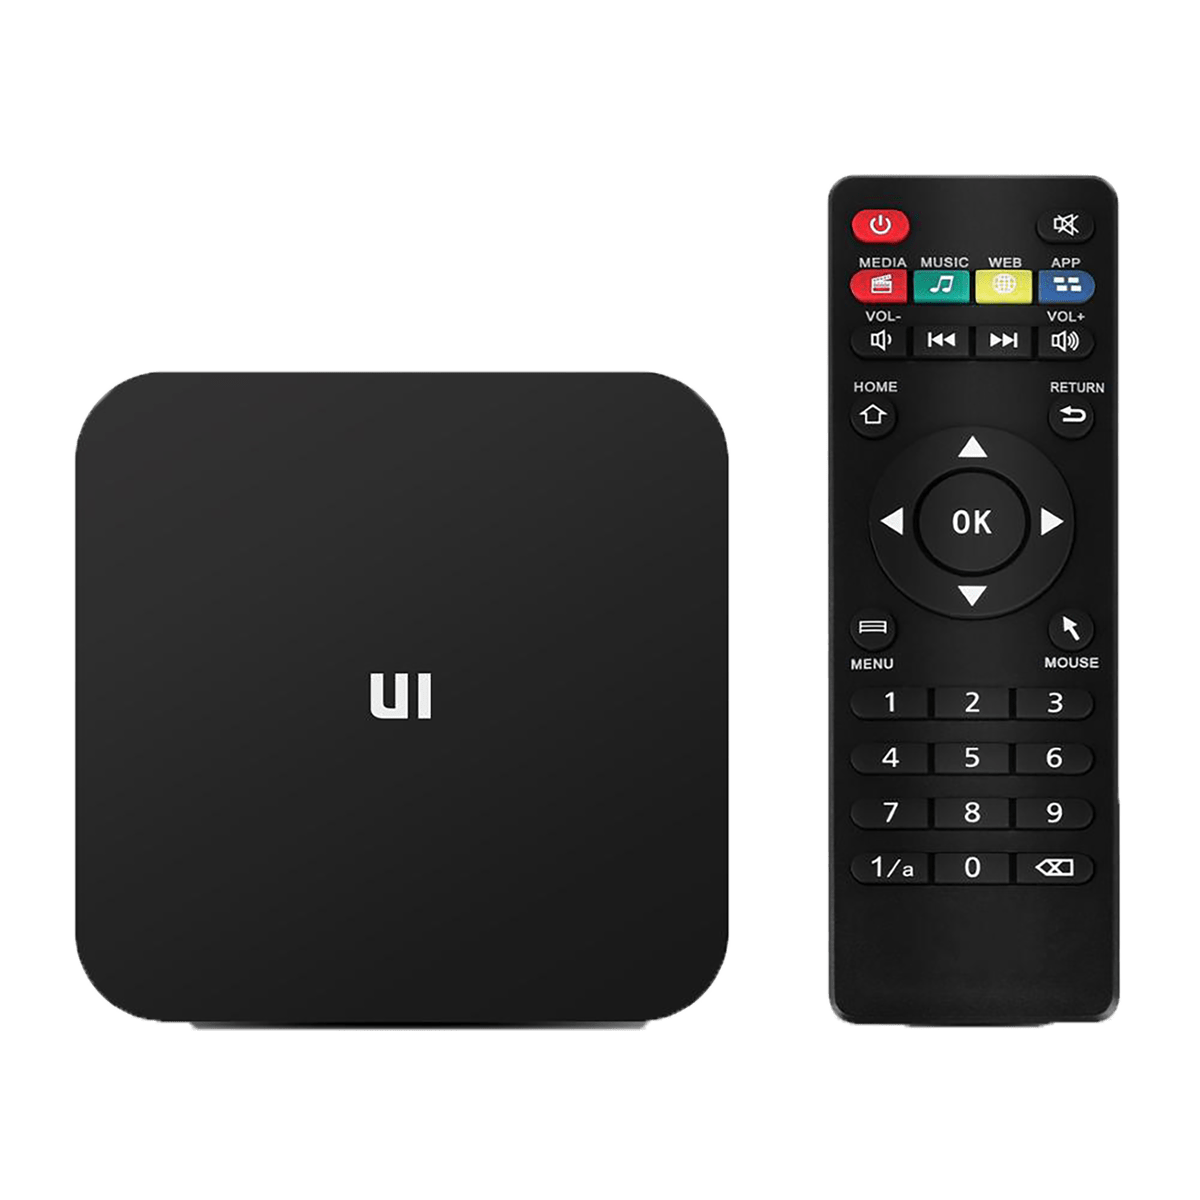 U1 Android 9.1 Smart TV Box 4K